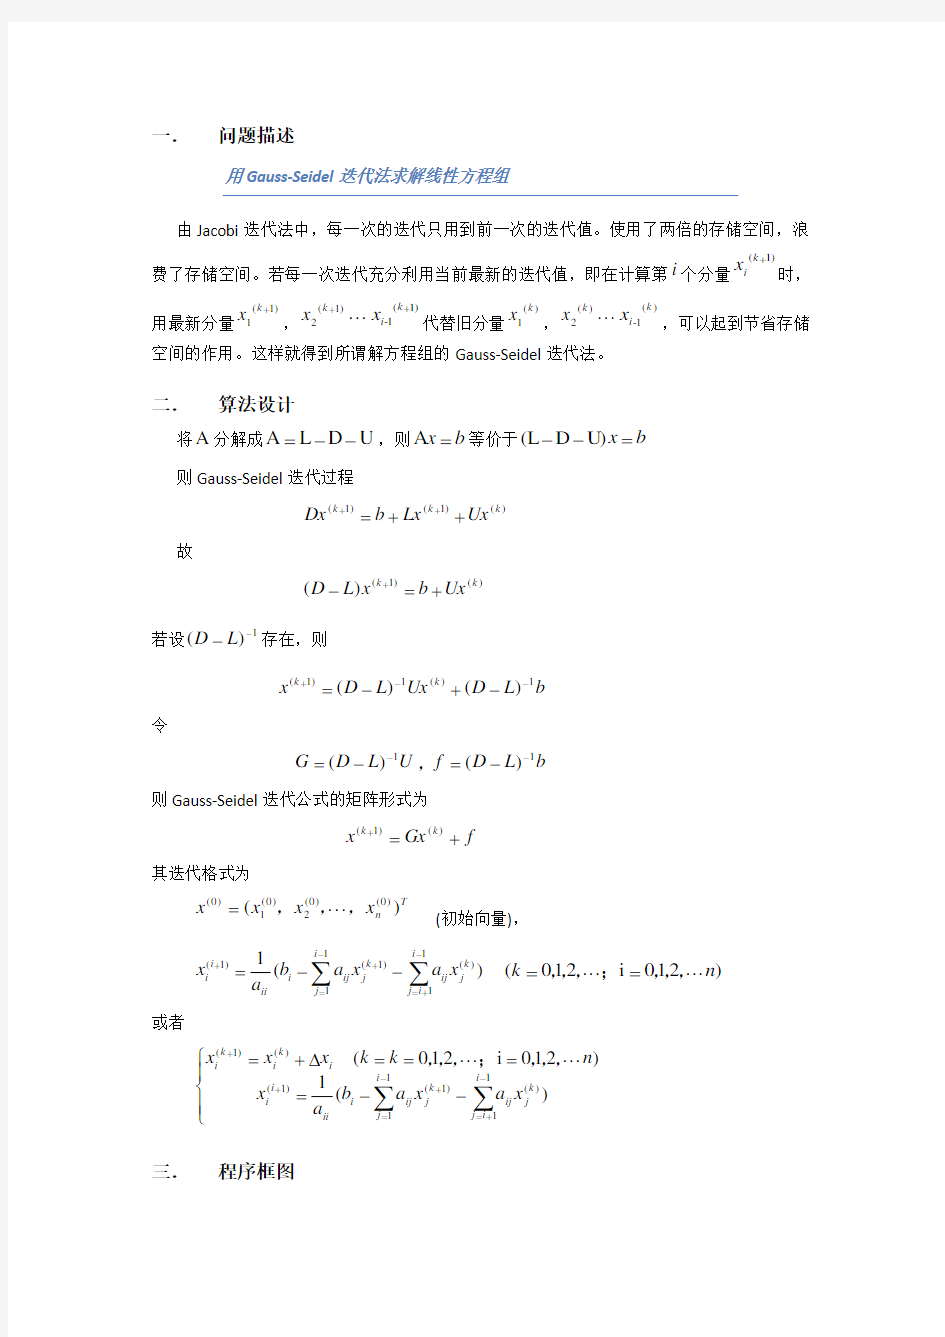 Gauss-Seidel迭代法求解线性方程组